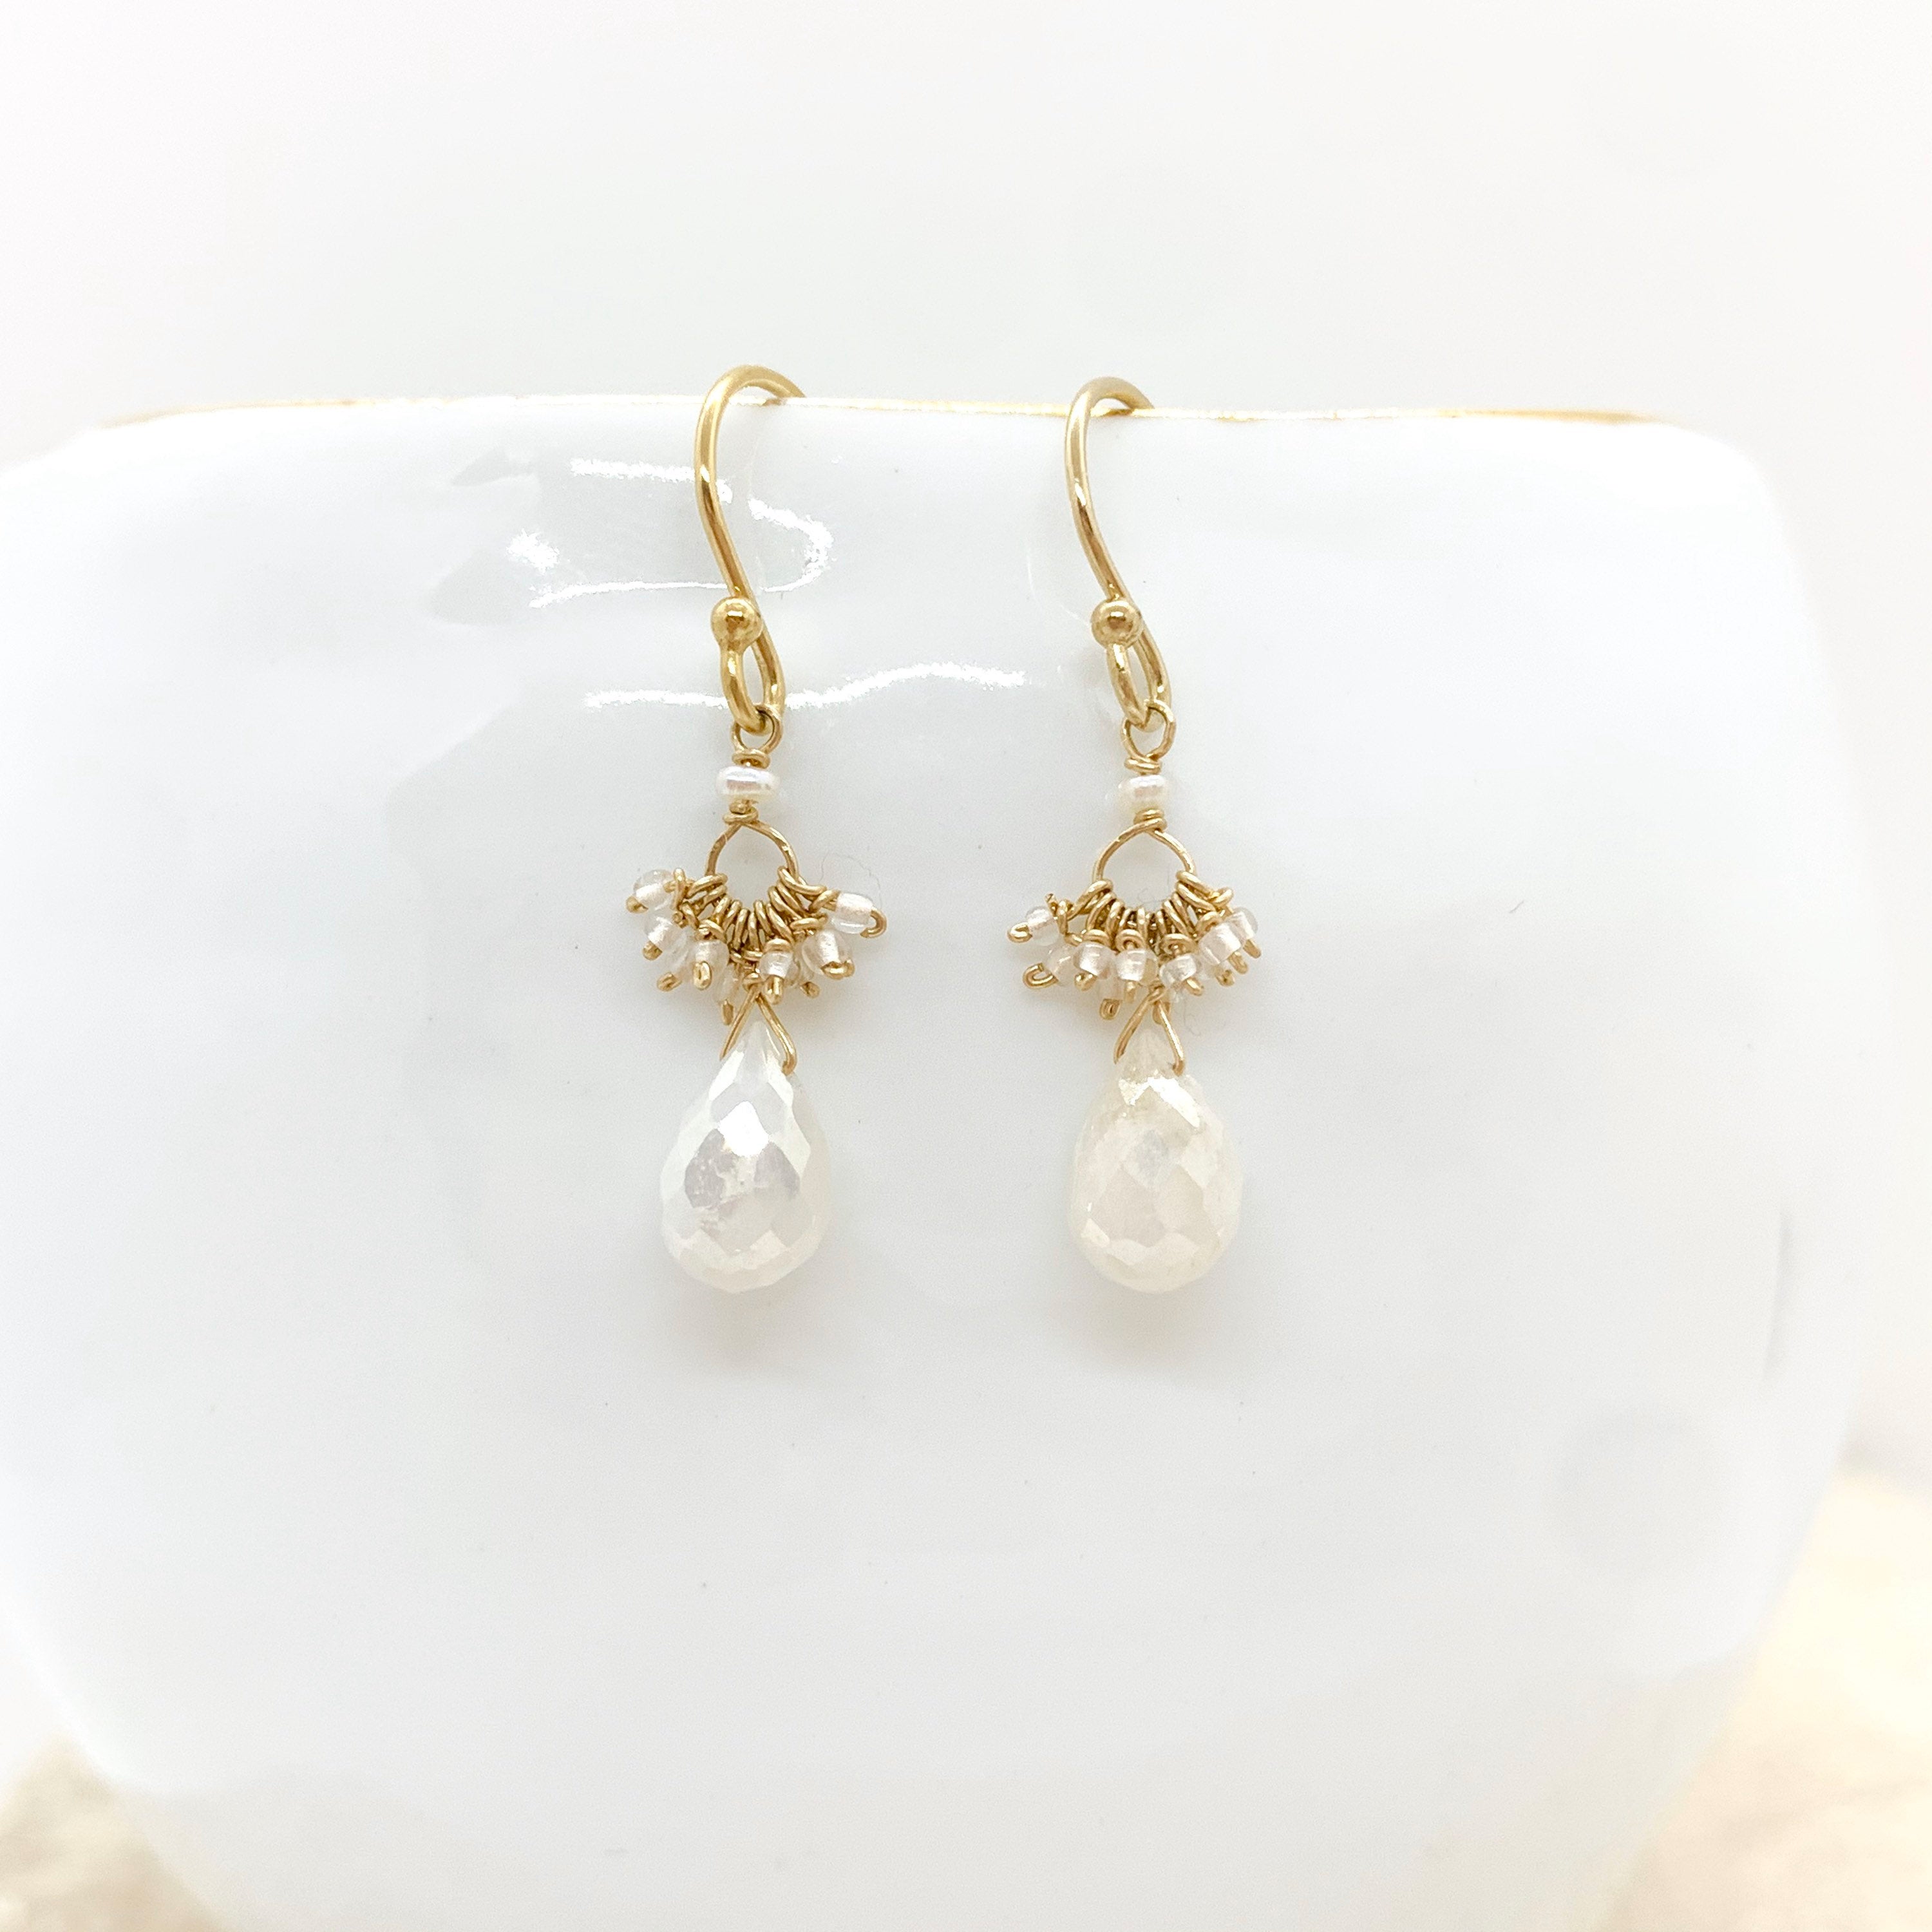 14k Gold Earrings w/ Mystic Corundum, Antique Italian Beads & Freshwater Pearl